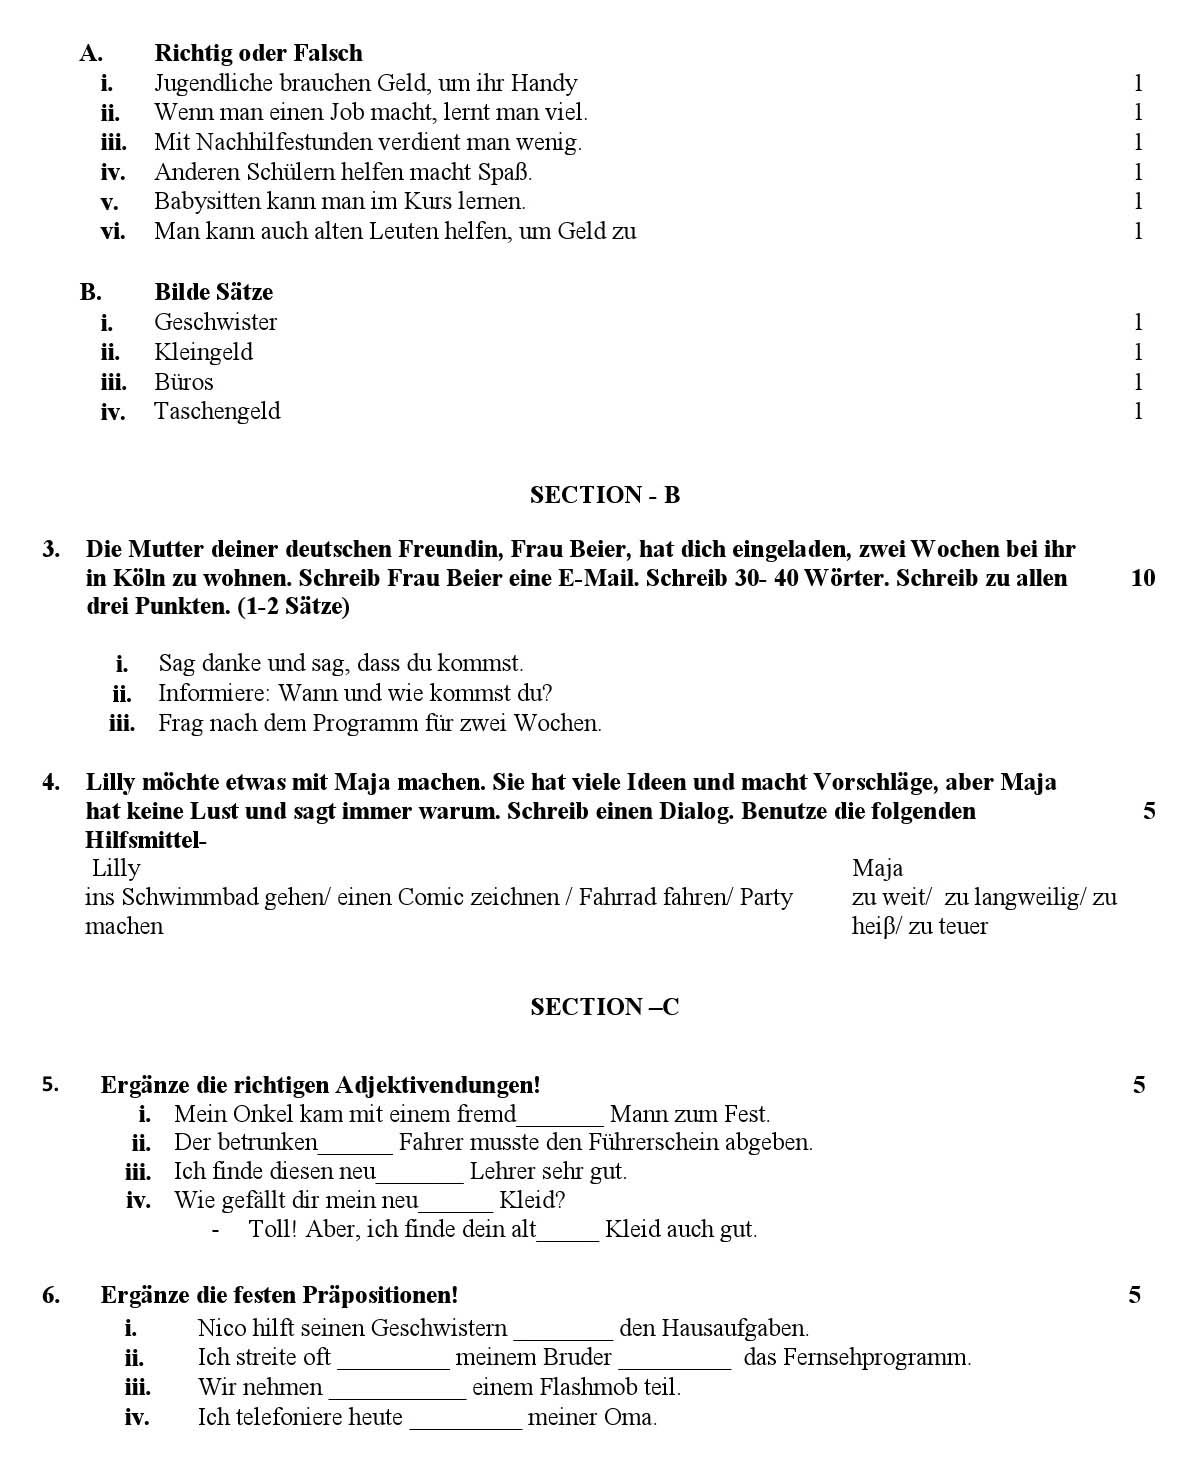 German CBSE Class X Sample Question Paper 2018-19 - Image 2